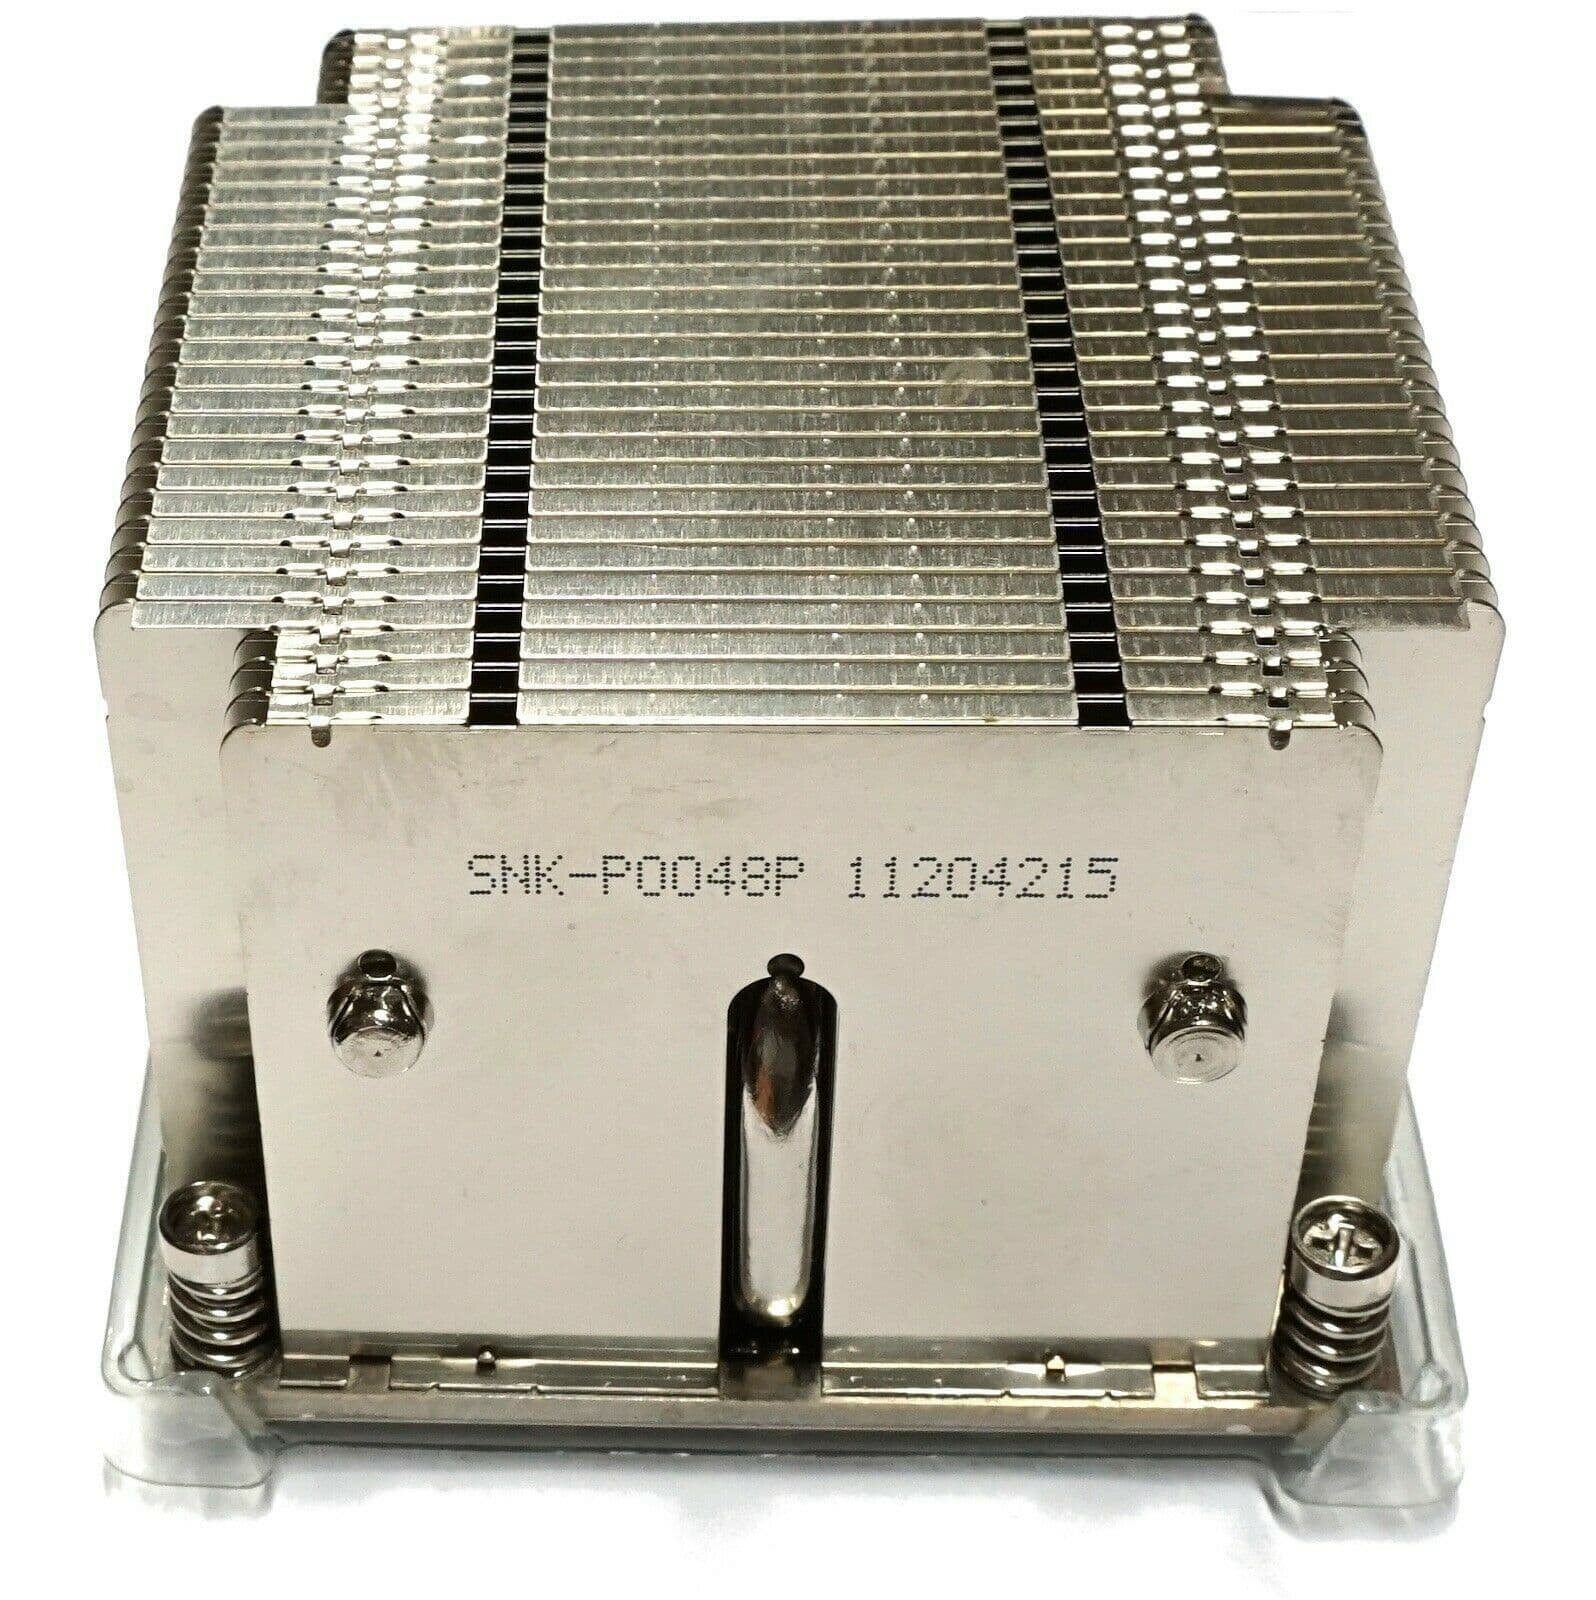   Supermicro SNK-P0048P 2U LGA2011/LGA2066, AMD/X8/X9/X10 Gen., Square ILM (OEM)